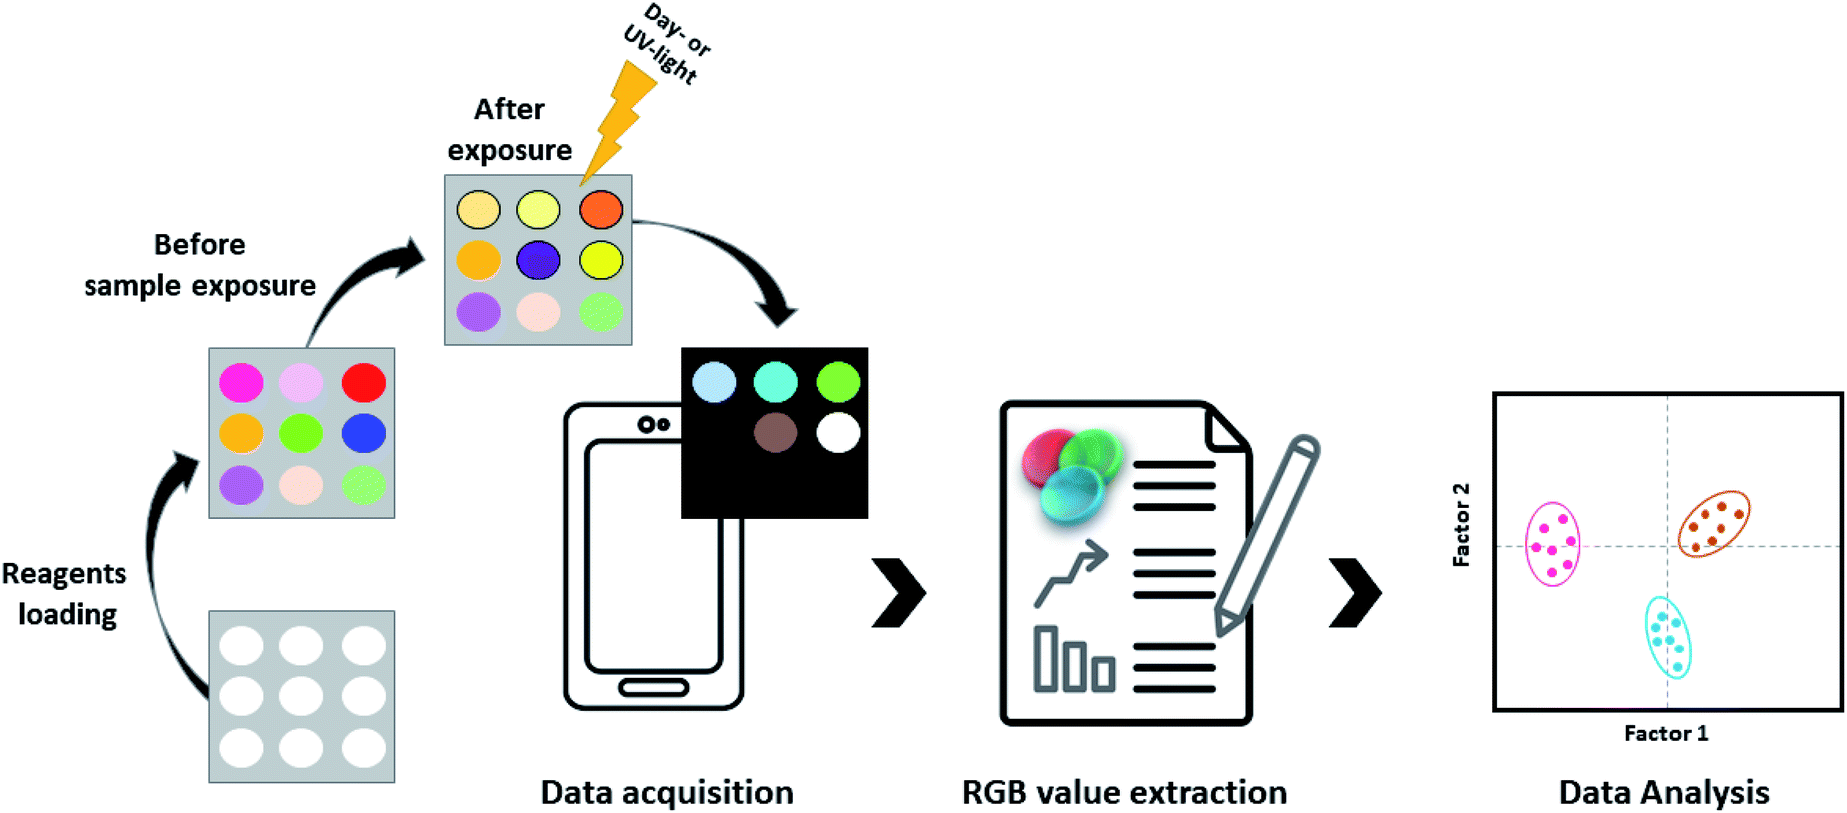 Colorimetric sensors and nanoprobes for characterizing antioxidant and  energetic substances - Analytical Methods (RSC Publishing)  DOI:10.1039/D0AY01521K